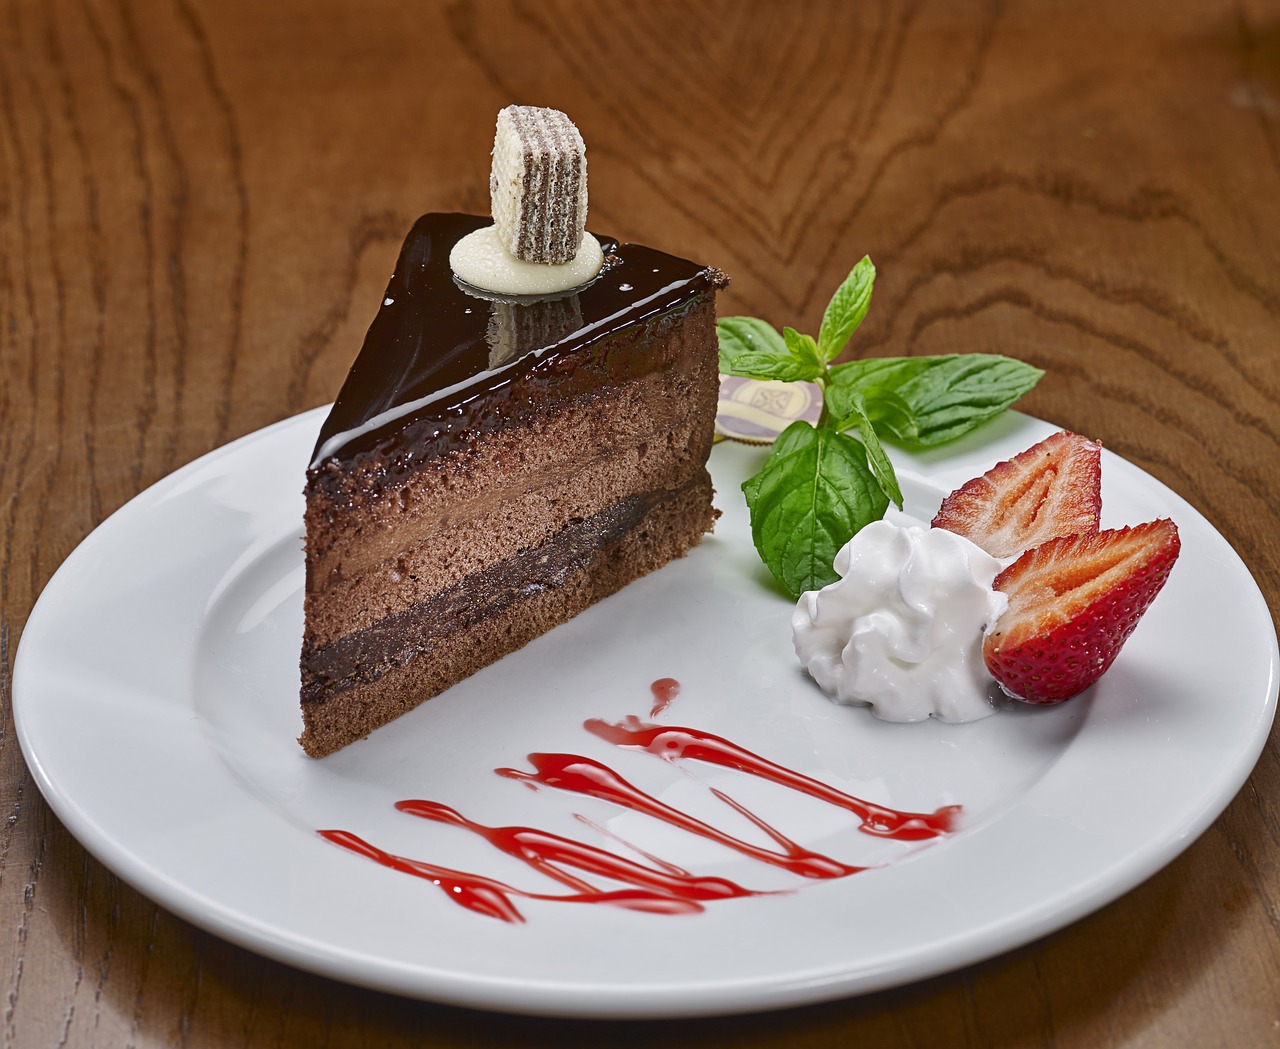 pie  chocolate cake  presentation on the plate free photo